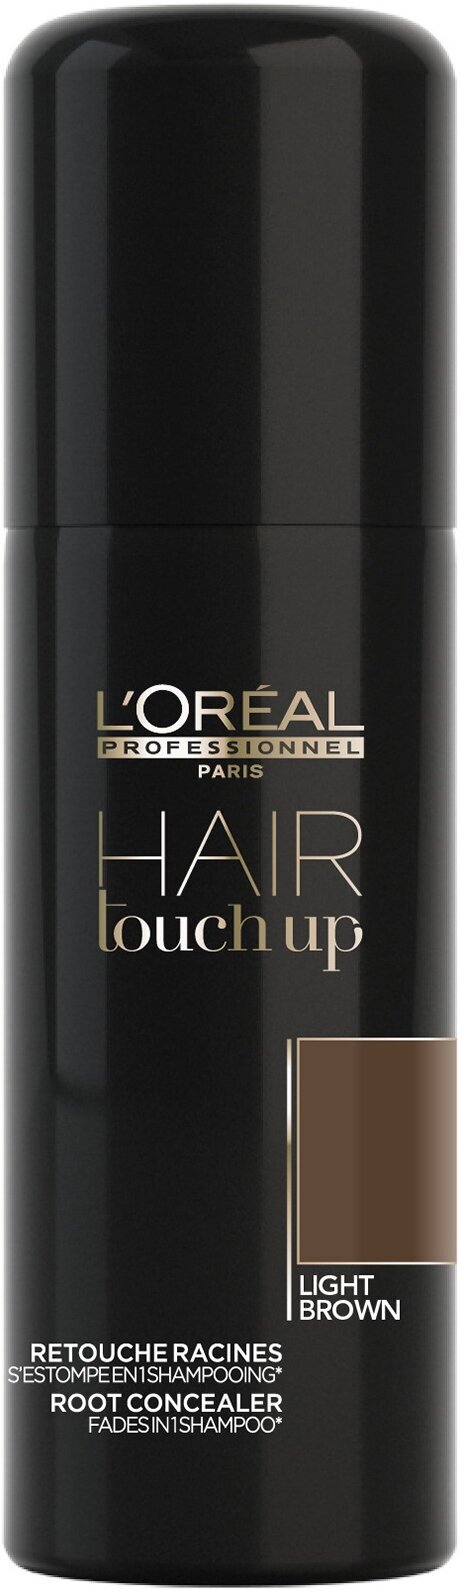 Тонирующий спрей L'Oreal Professionnel Hair Touch Up Light Brown 75 мл .